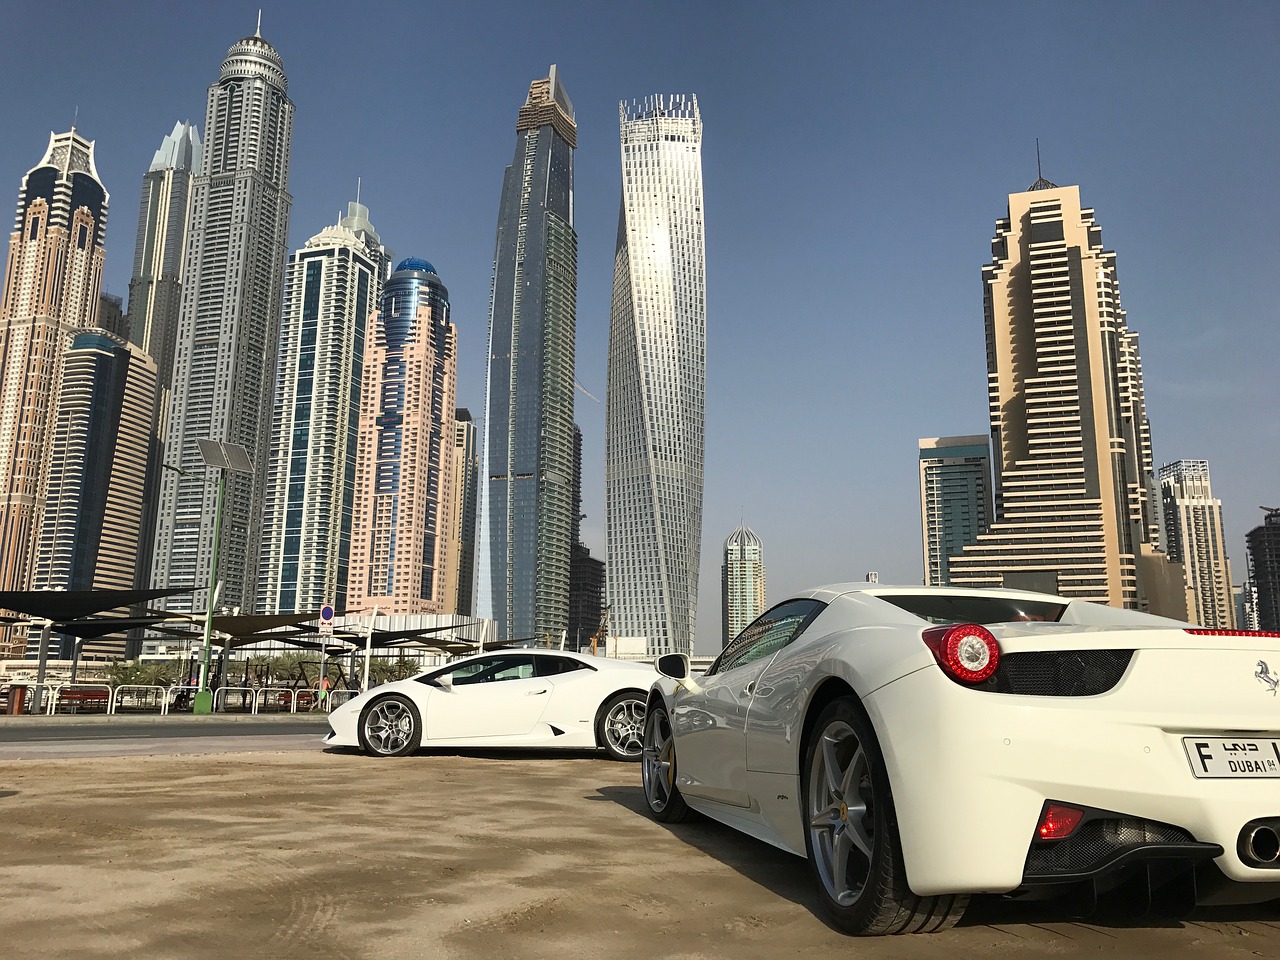 Farrari in Dubai